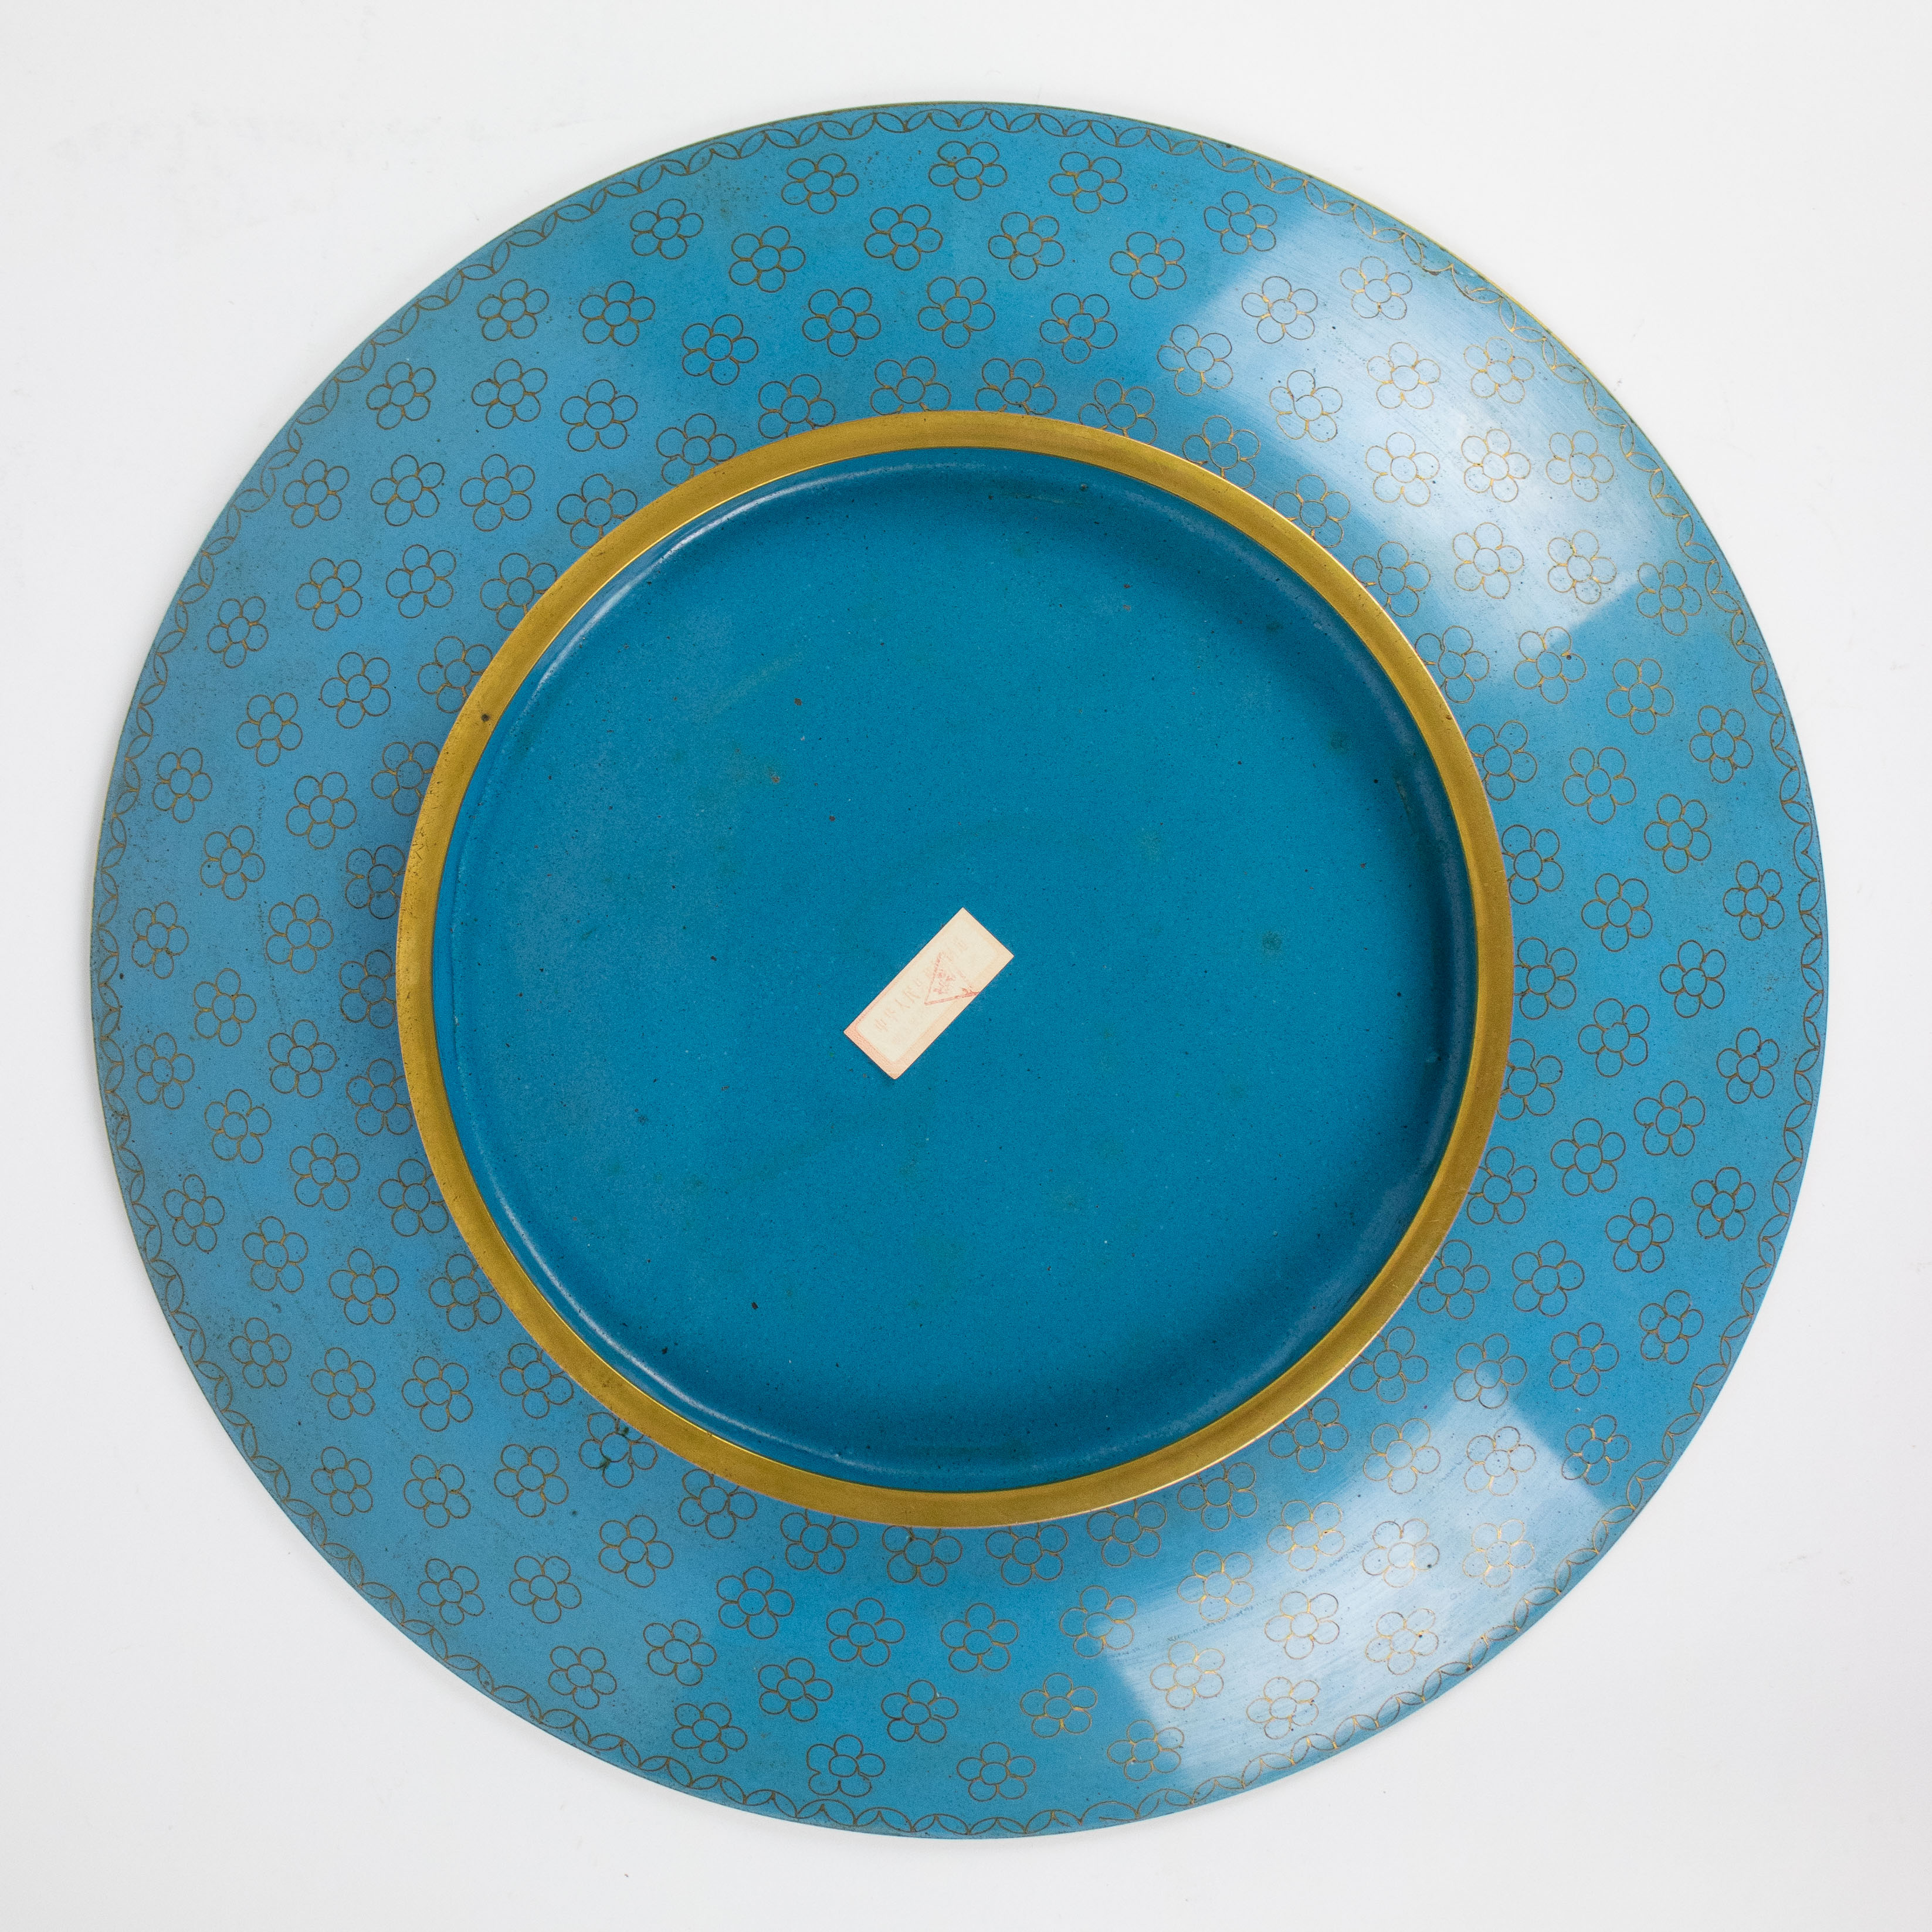 Japanse cloisoné plate with pedestal - Image 3 of 3